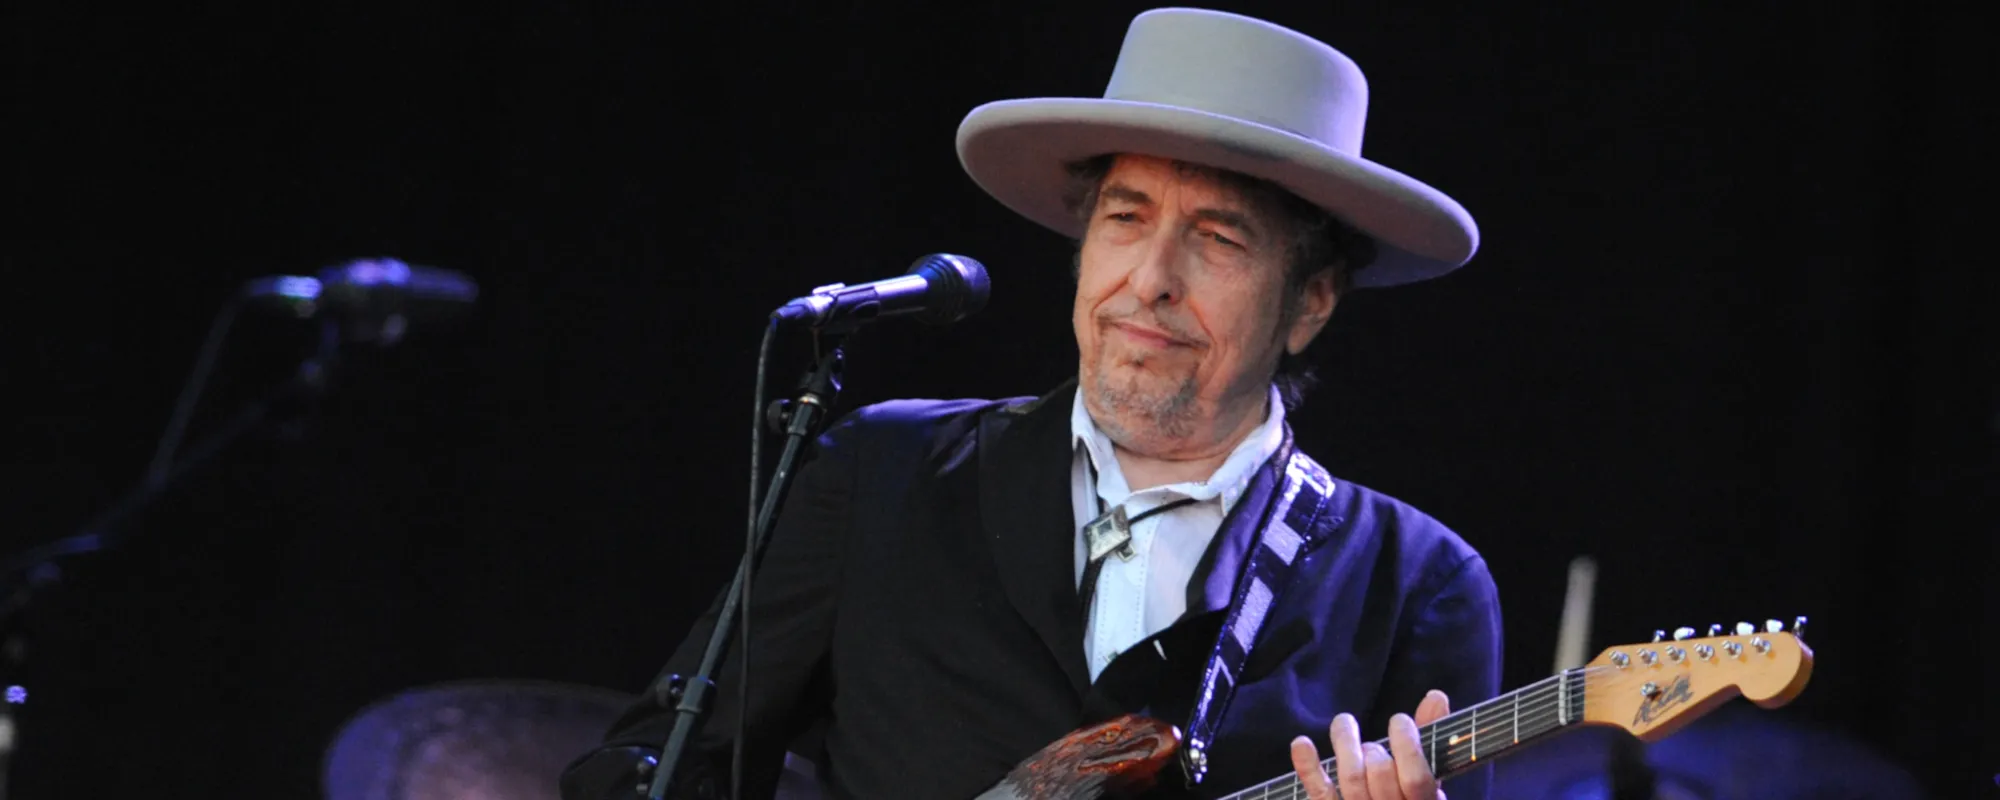 Bob Dylan Releases Original “Not Dark Yet” from Upcoming Bootleg Series